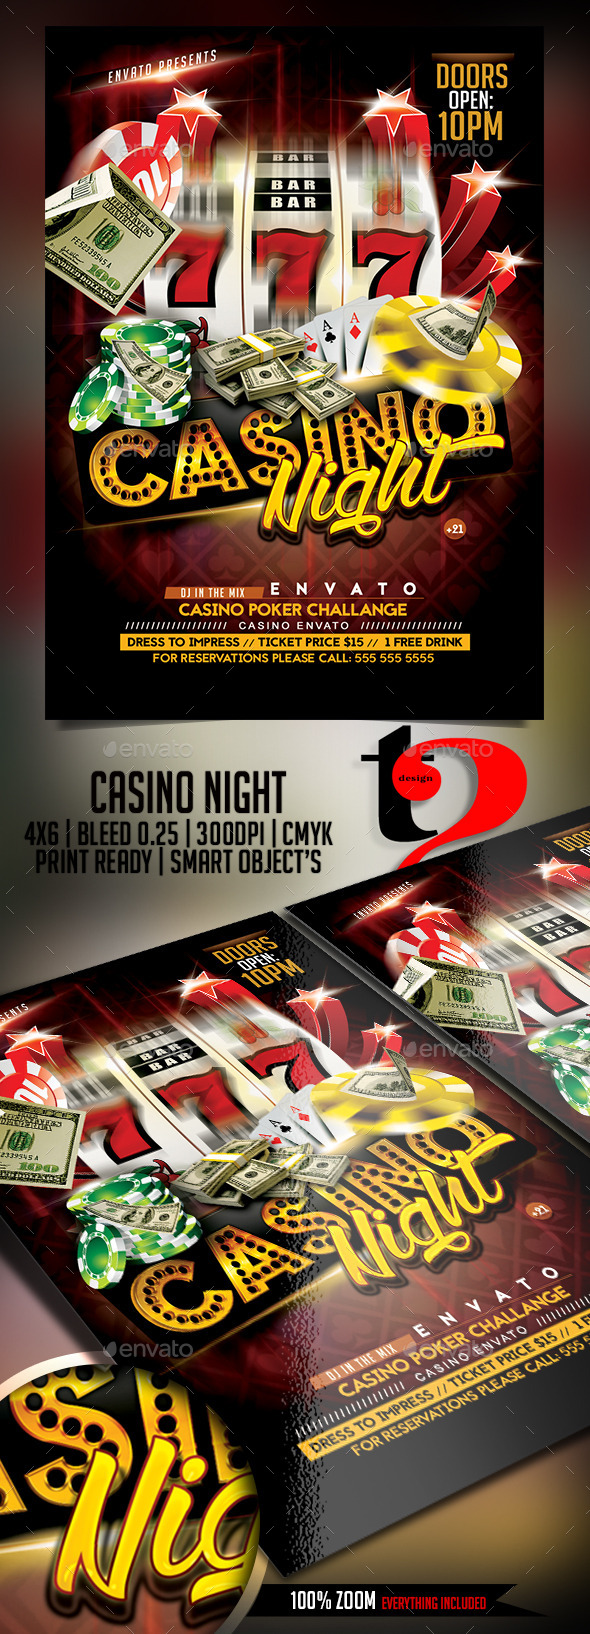 Casino night flyer template free